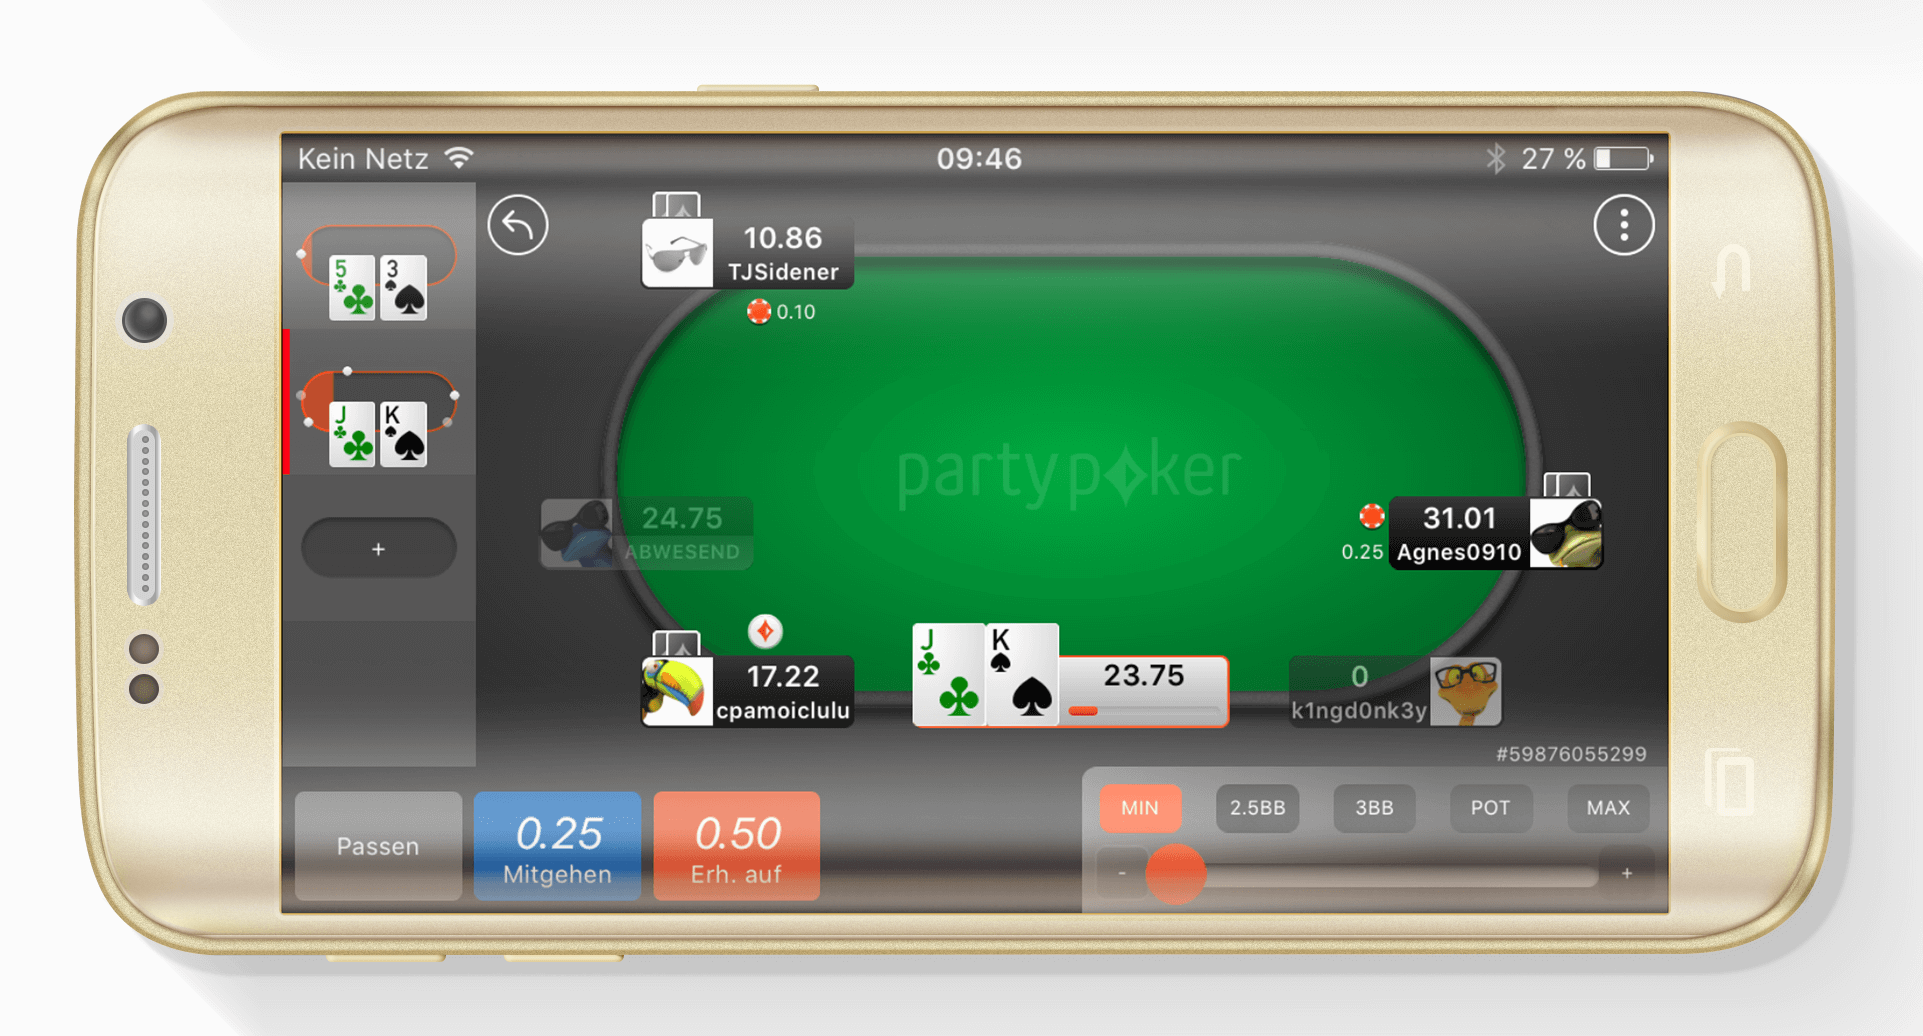 online poker real money usa legal apps